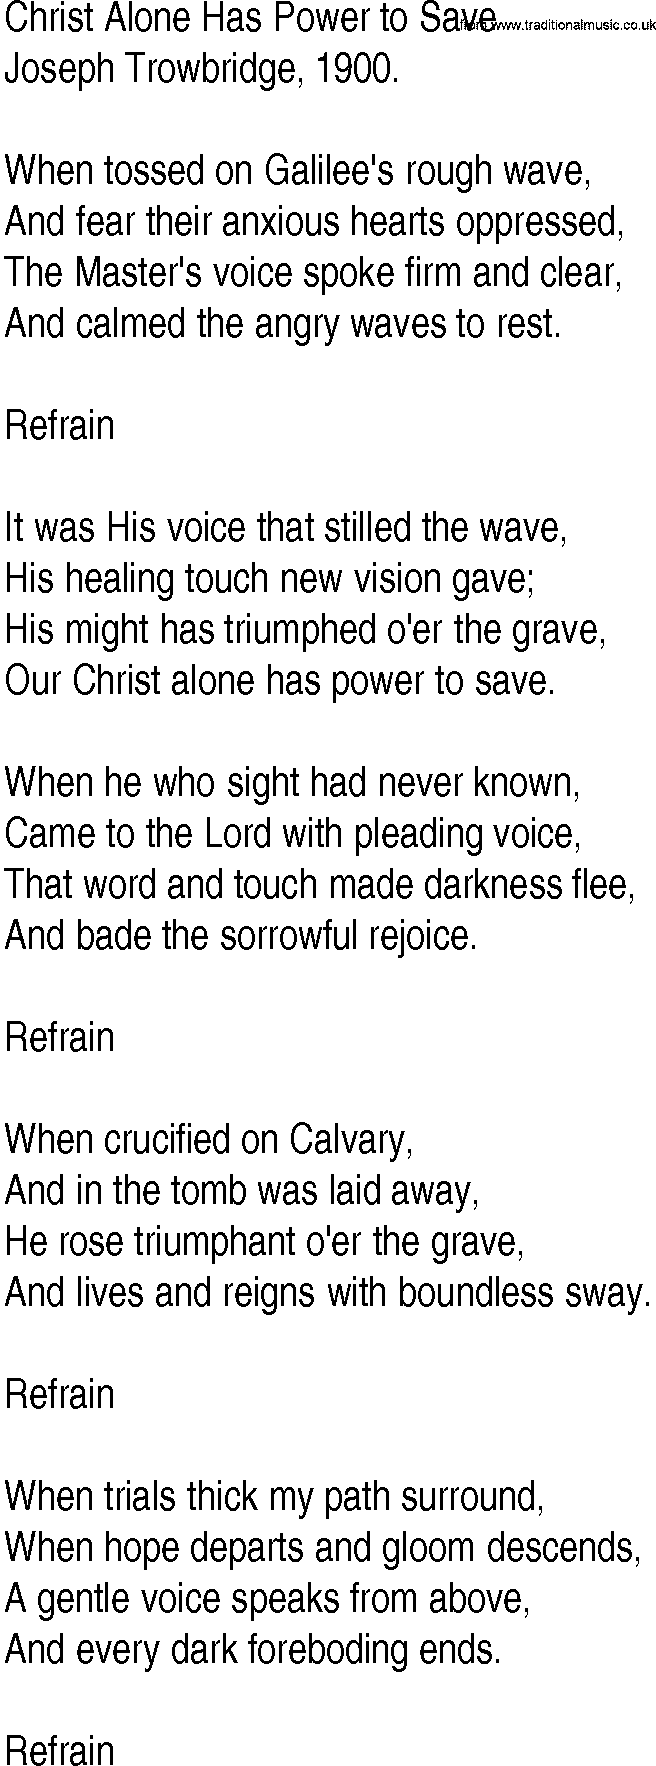 Hymn and Gospel Song: Christ Alone Has Power to Save by Joseph Trowbridge lyrics